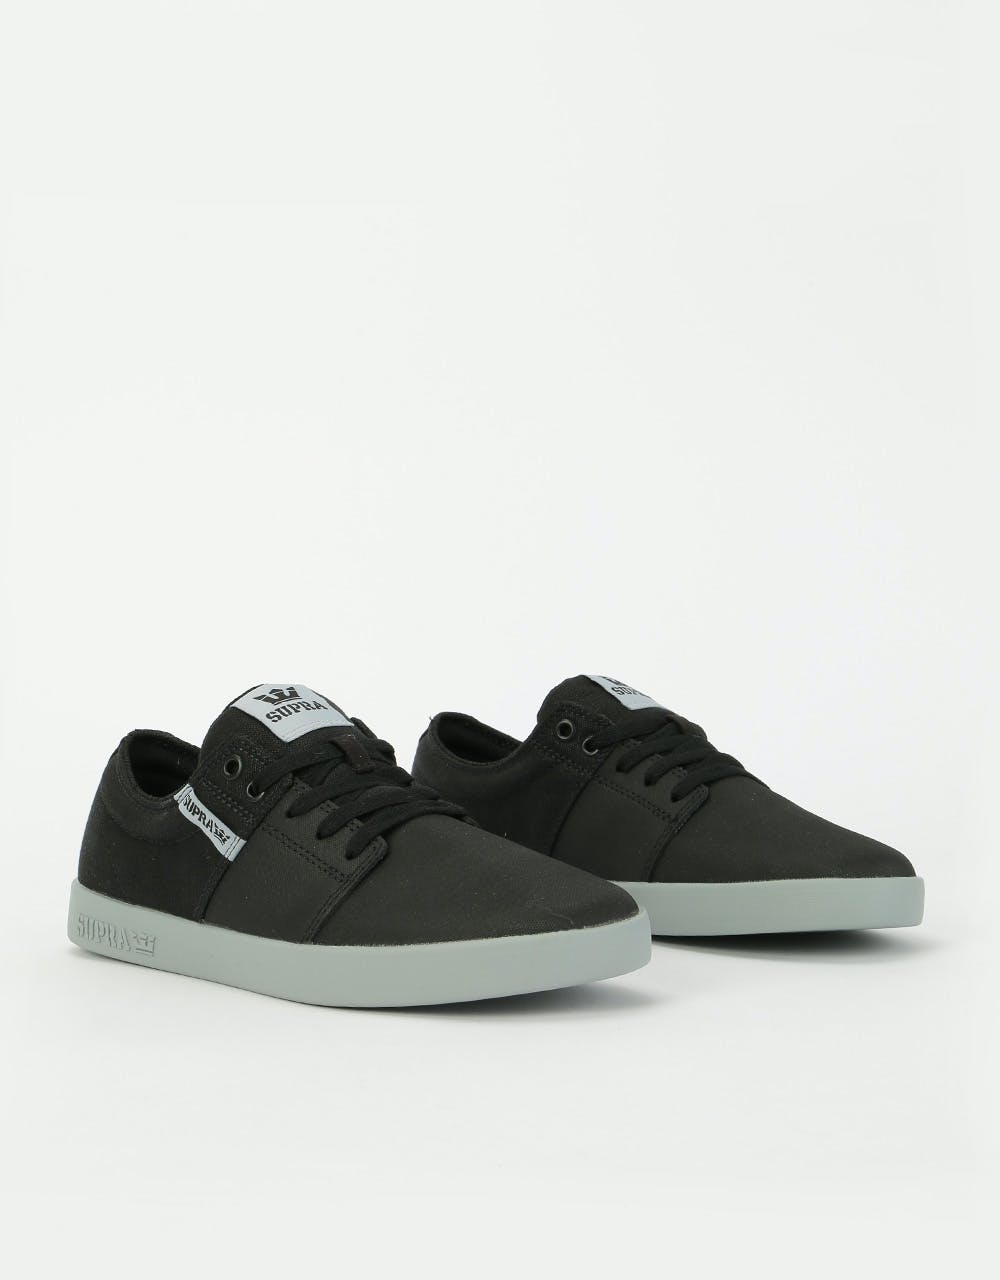 Supra Stacks II Skate Shoes - Black TUF/Light Grey